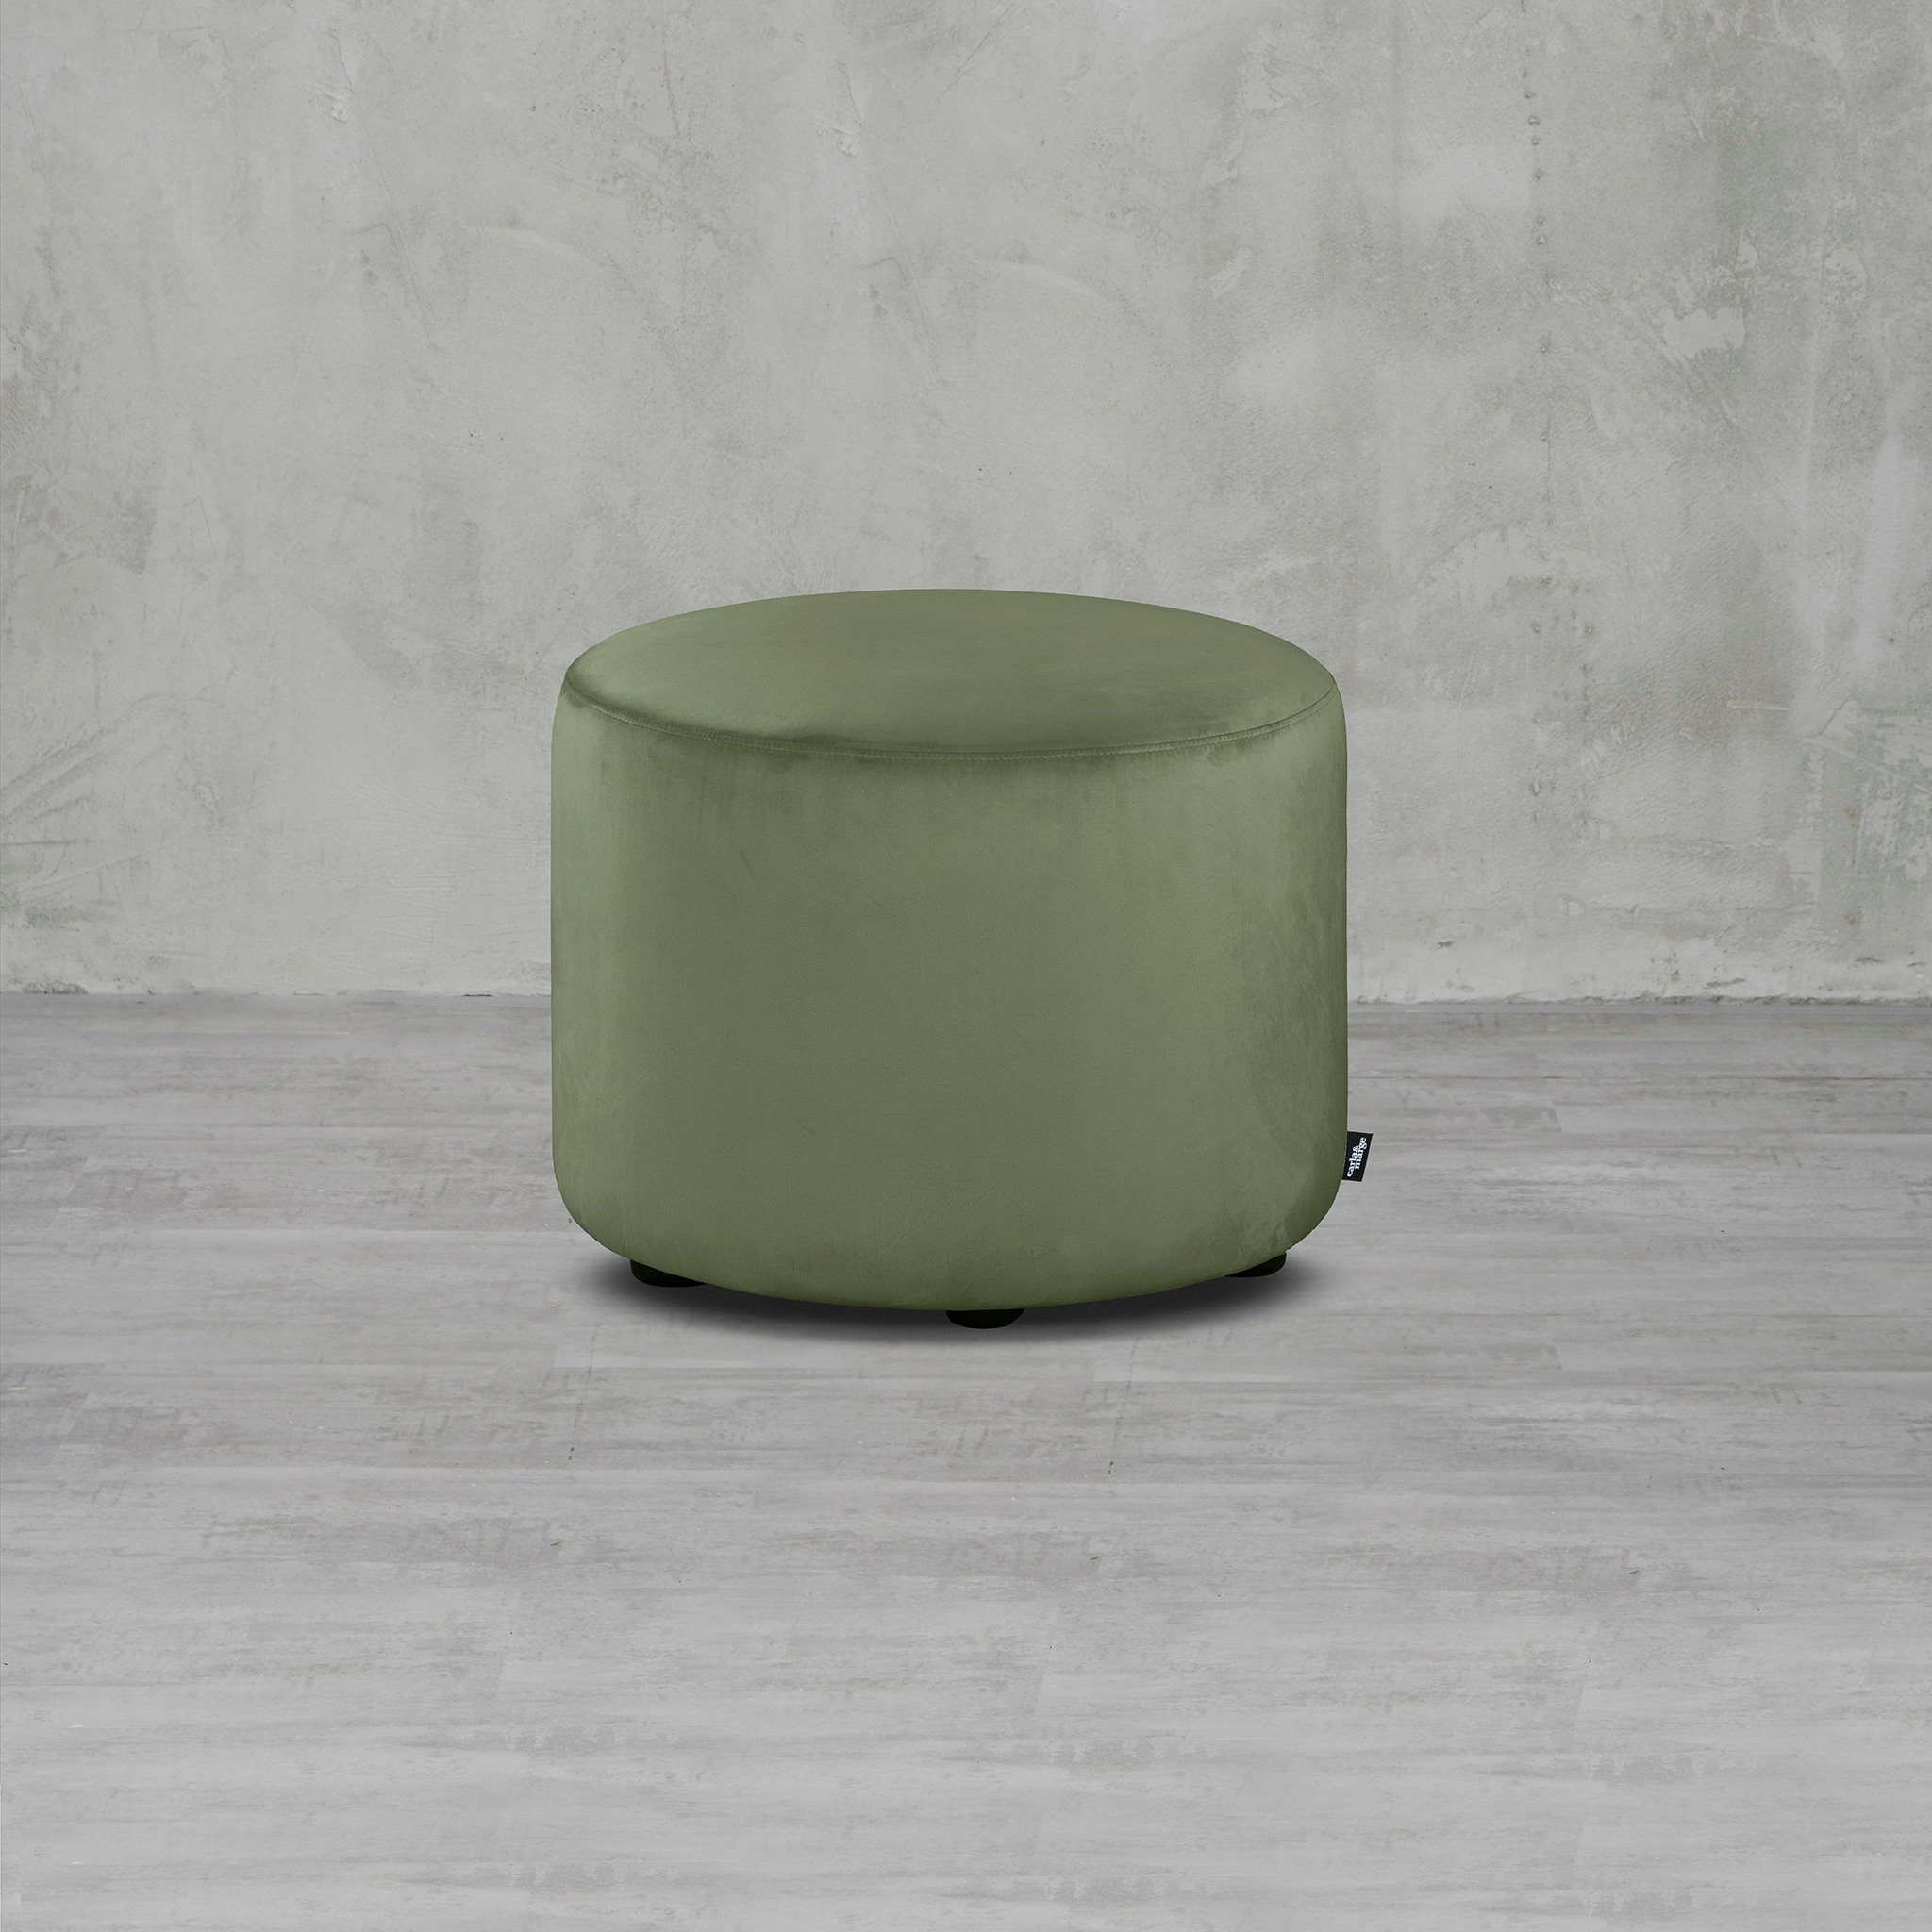 carla&marge Pouf Epomella (47x55x55 cm), Sitzhocker mit schmuseweichem Samtbezug in Grün Seaweed Green